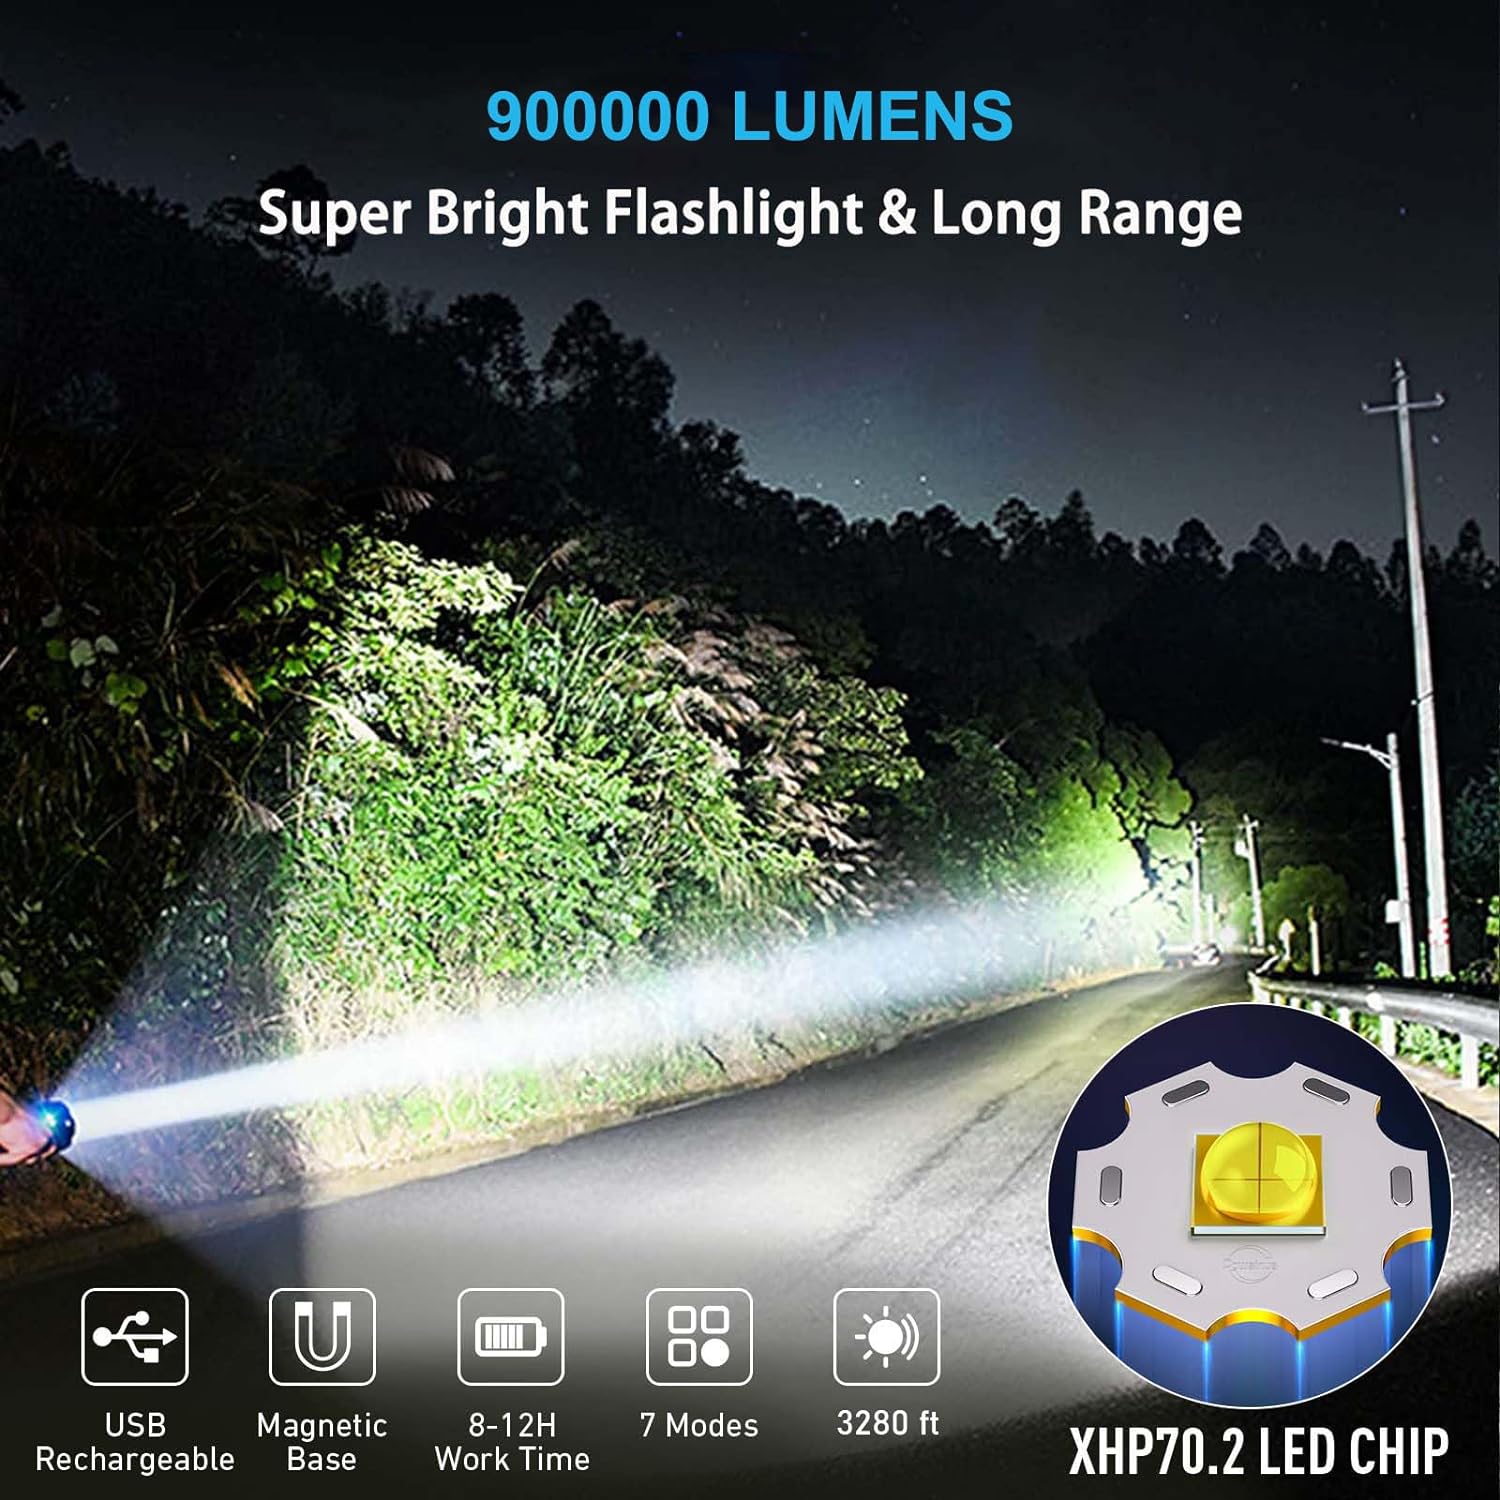 High Powered LED Flashlight